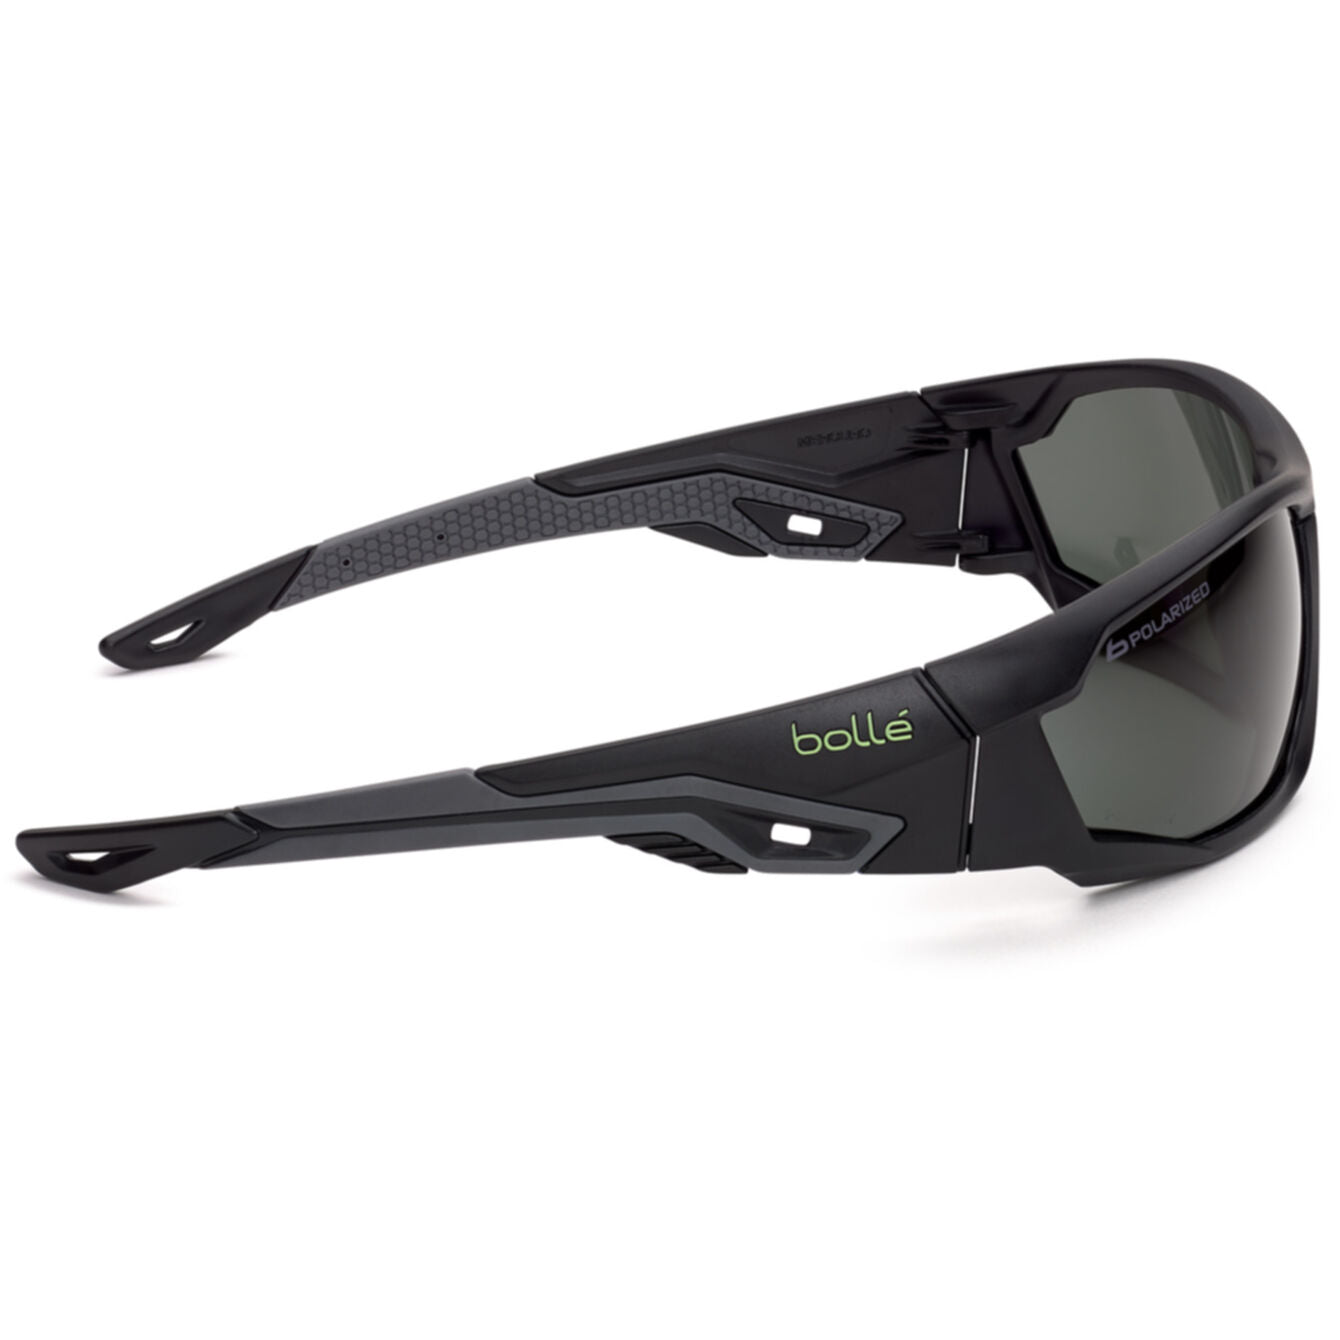 Bolle MERCURO Polarized Safety Glasses - MERPOL